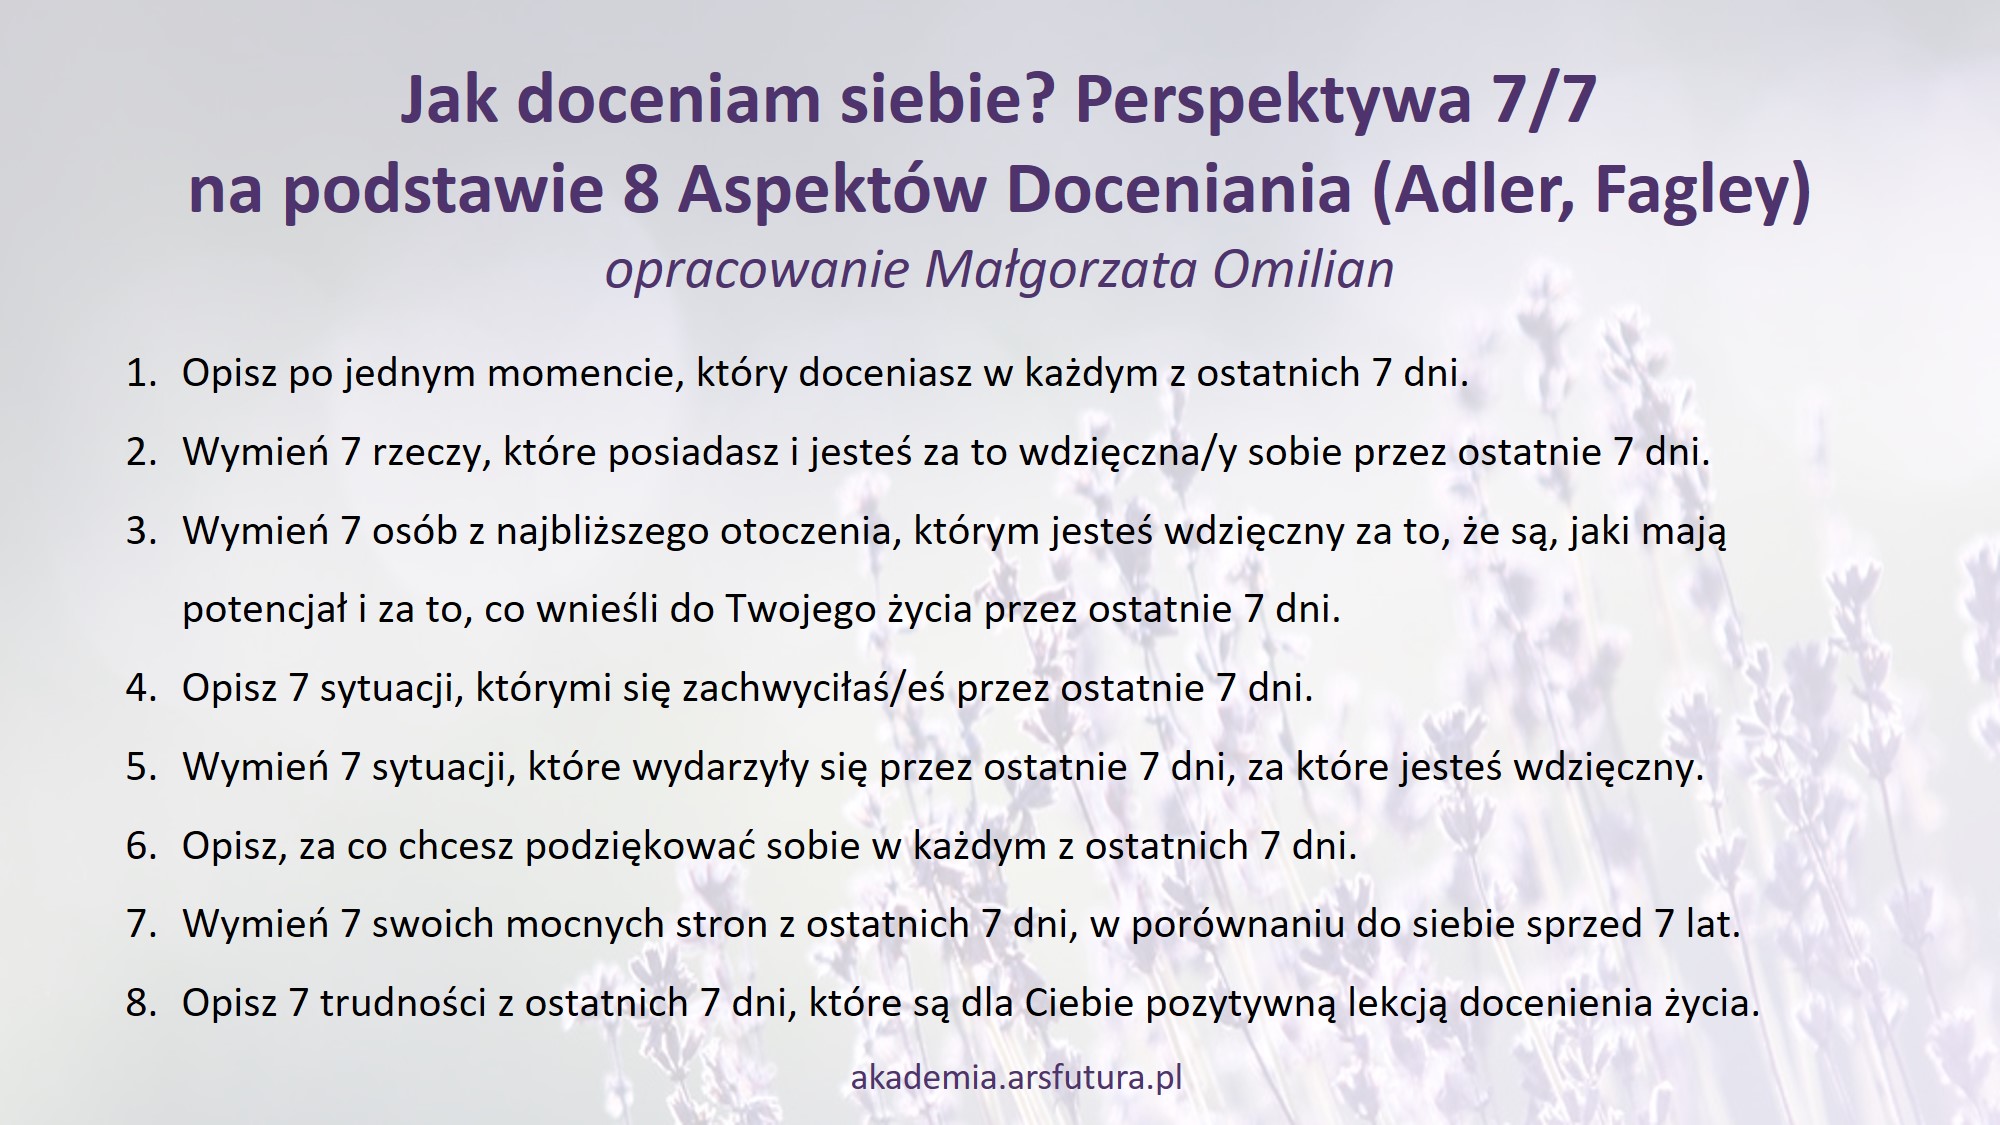 Docenianie siebie - perspektywa 7/7 - akademia.arsfutura.pl